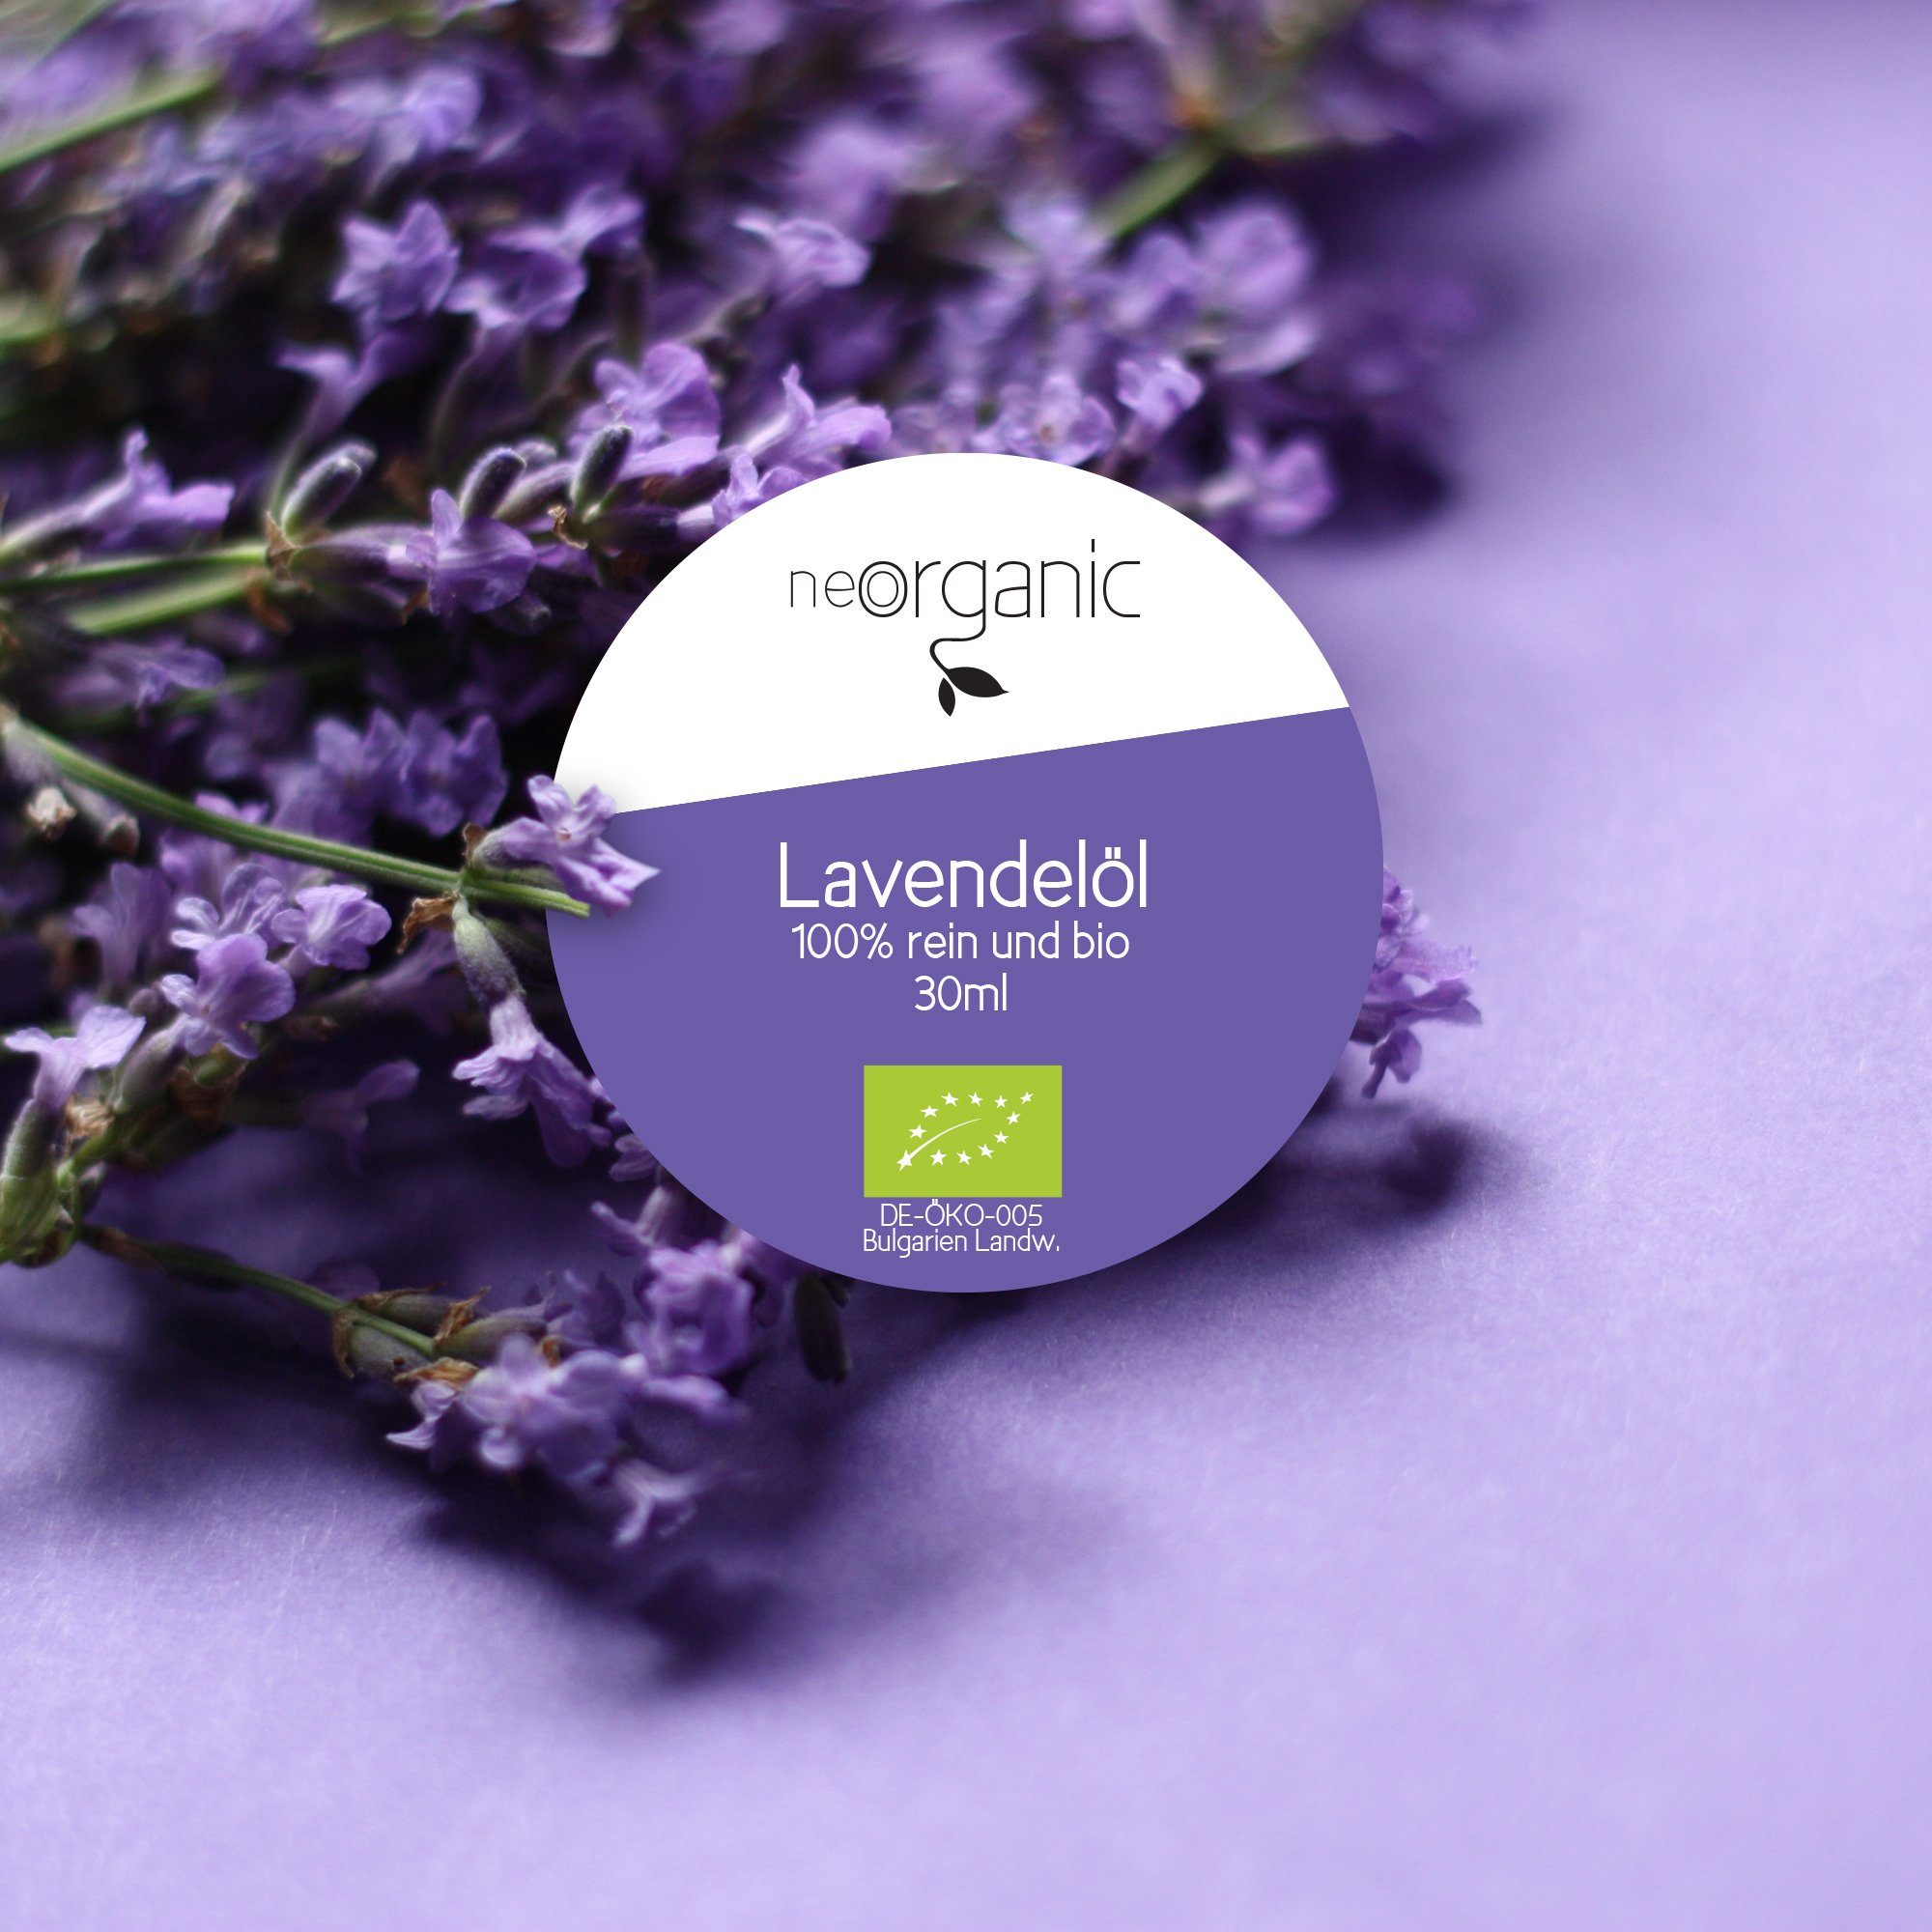 30ml BIO – Duftöl Lavendelöl Angustifolia, aus dem Lavendel echten Lavandula NeoOrganic